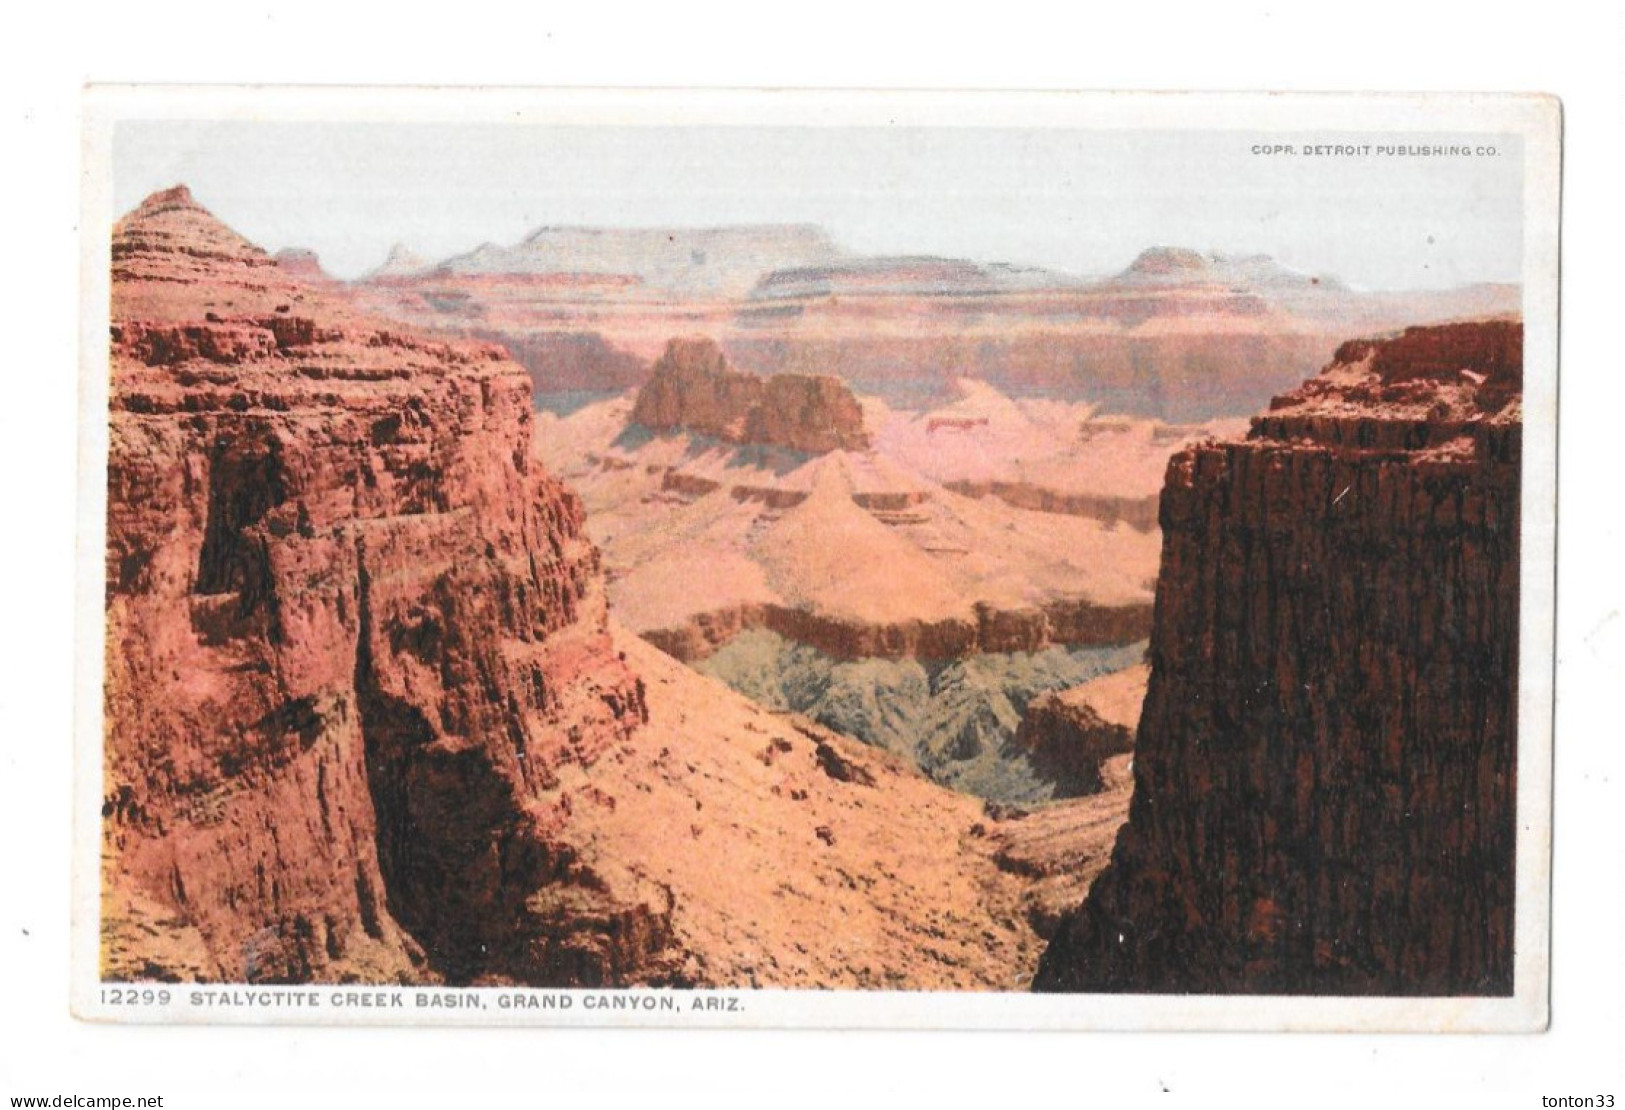 ARIZONA - ETATS UNIS - Stalycitite Creek Basin  GRAND CANYON -  ARIZ - GEO 4 - - Grand Canyon